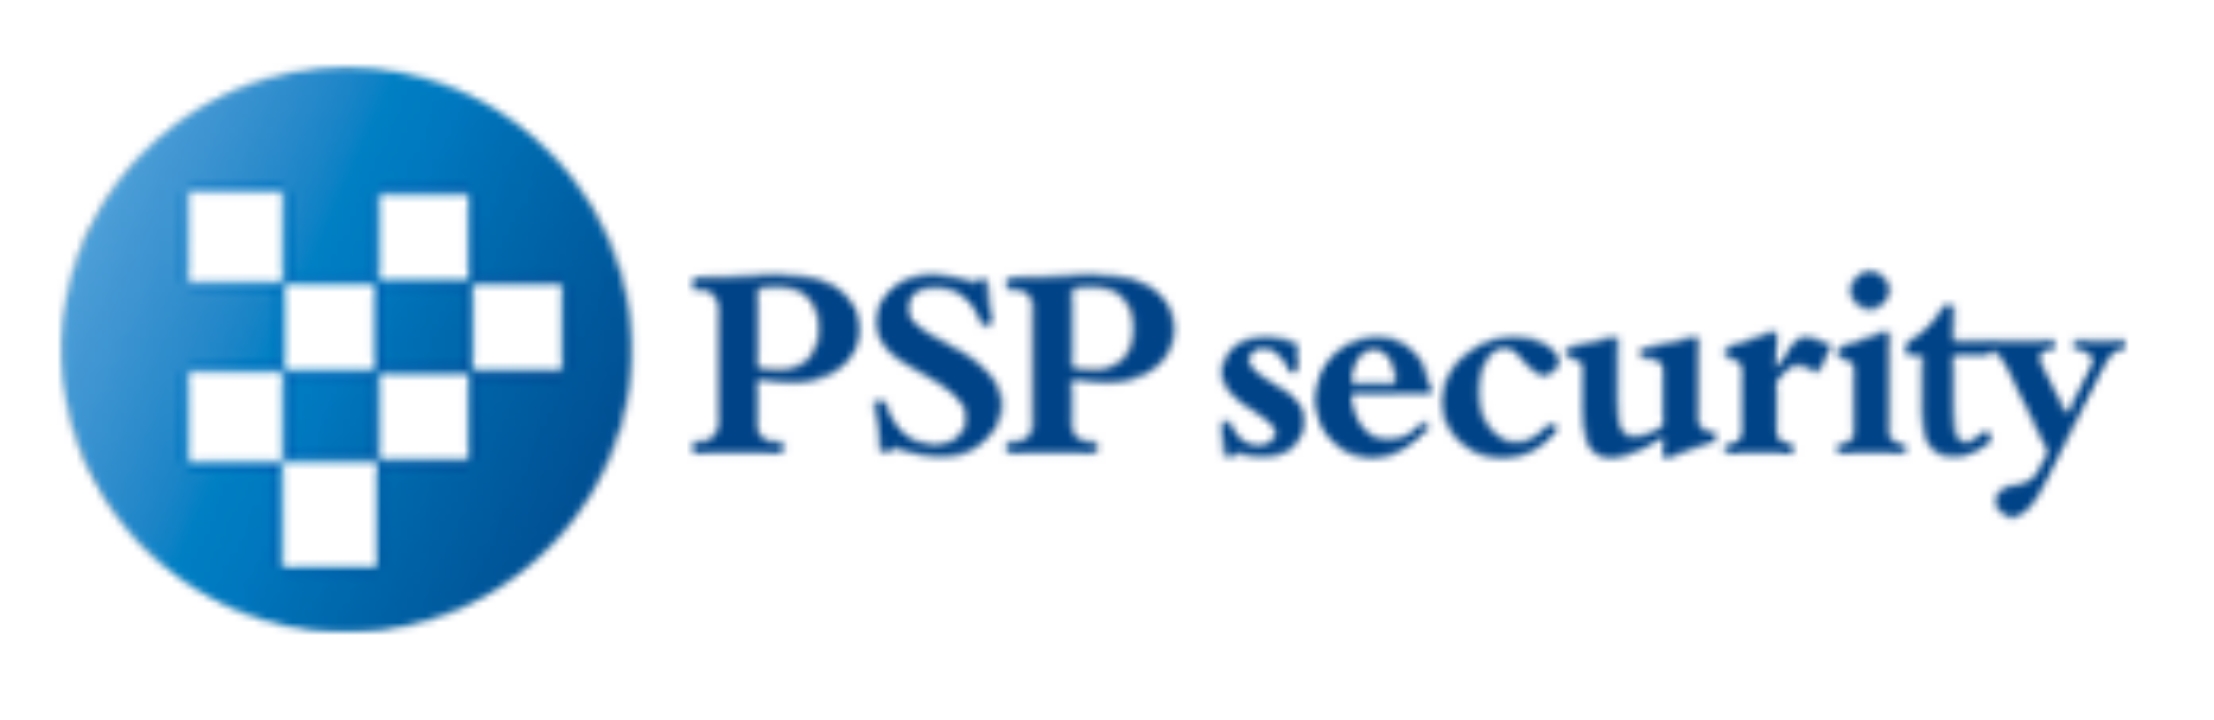 PSP SECURITY